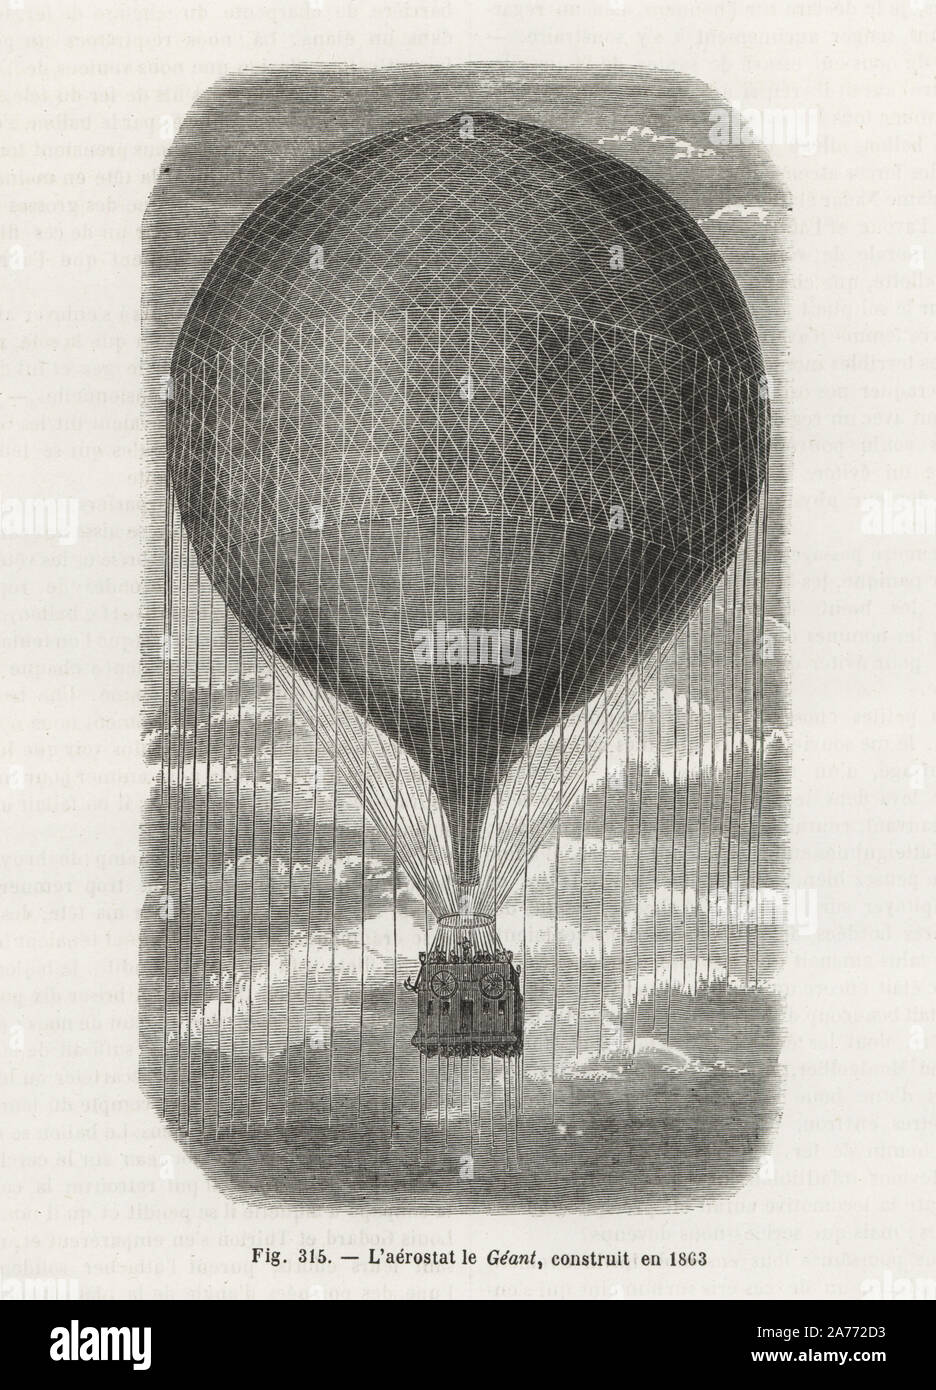 Der Riese (Le Geant) Ballon, 1863 gebaut für Felix Nadar. Holzschnitt Kupferstich von Louis Figuier's 'Les merveilles de la Science: Aerostats" (Wunder der Wissenschaft: Luftballons), Furne, Jouvet et Cie, Paris, 1868. Stockfoto